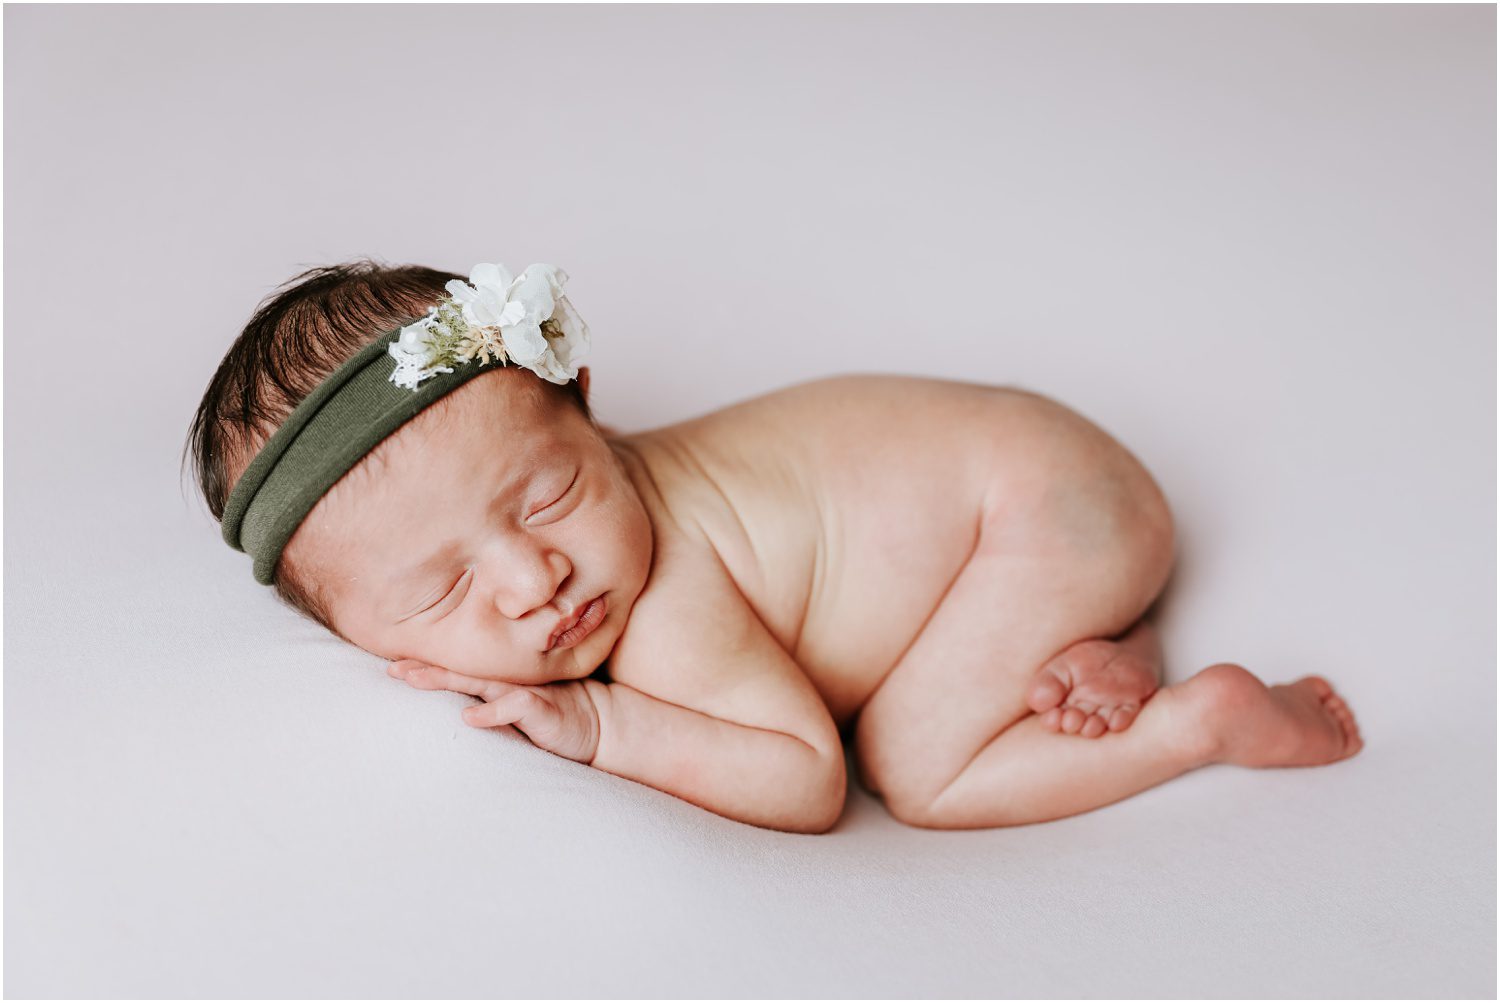 NEPA Studio Newborn Photographer, professional newborn portraits